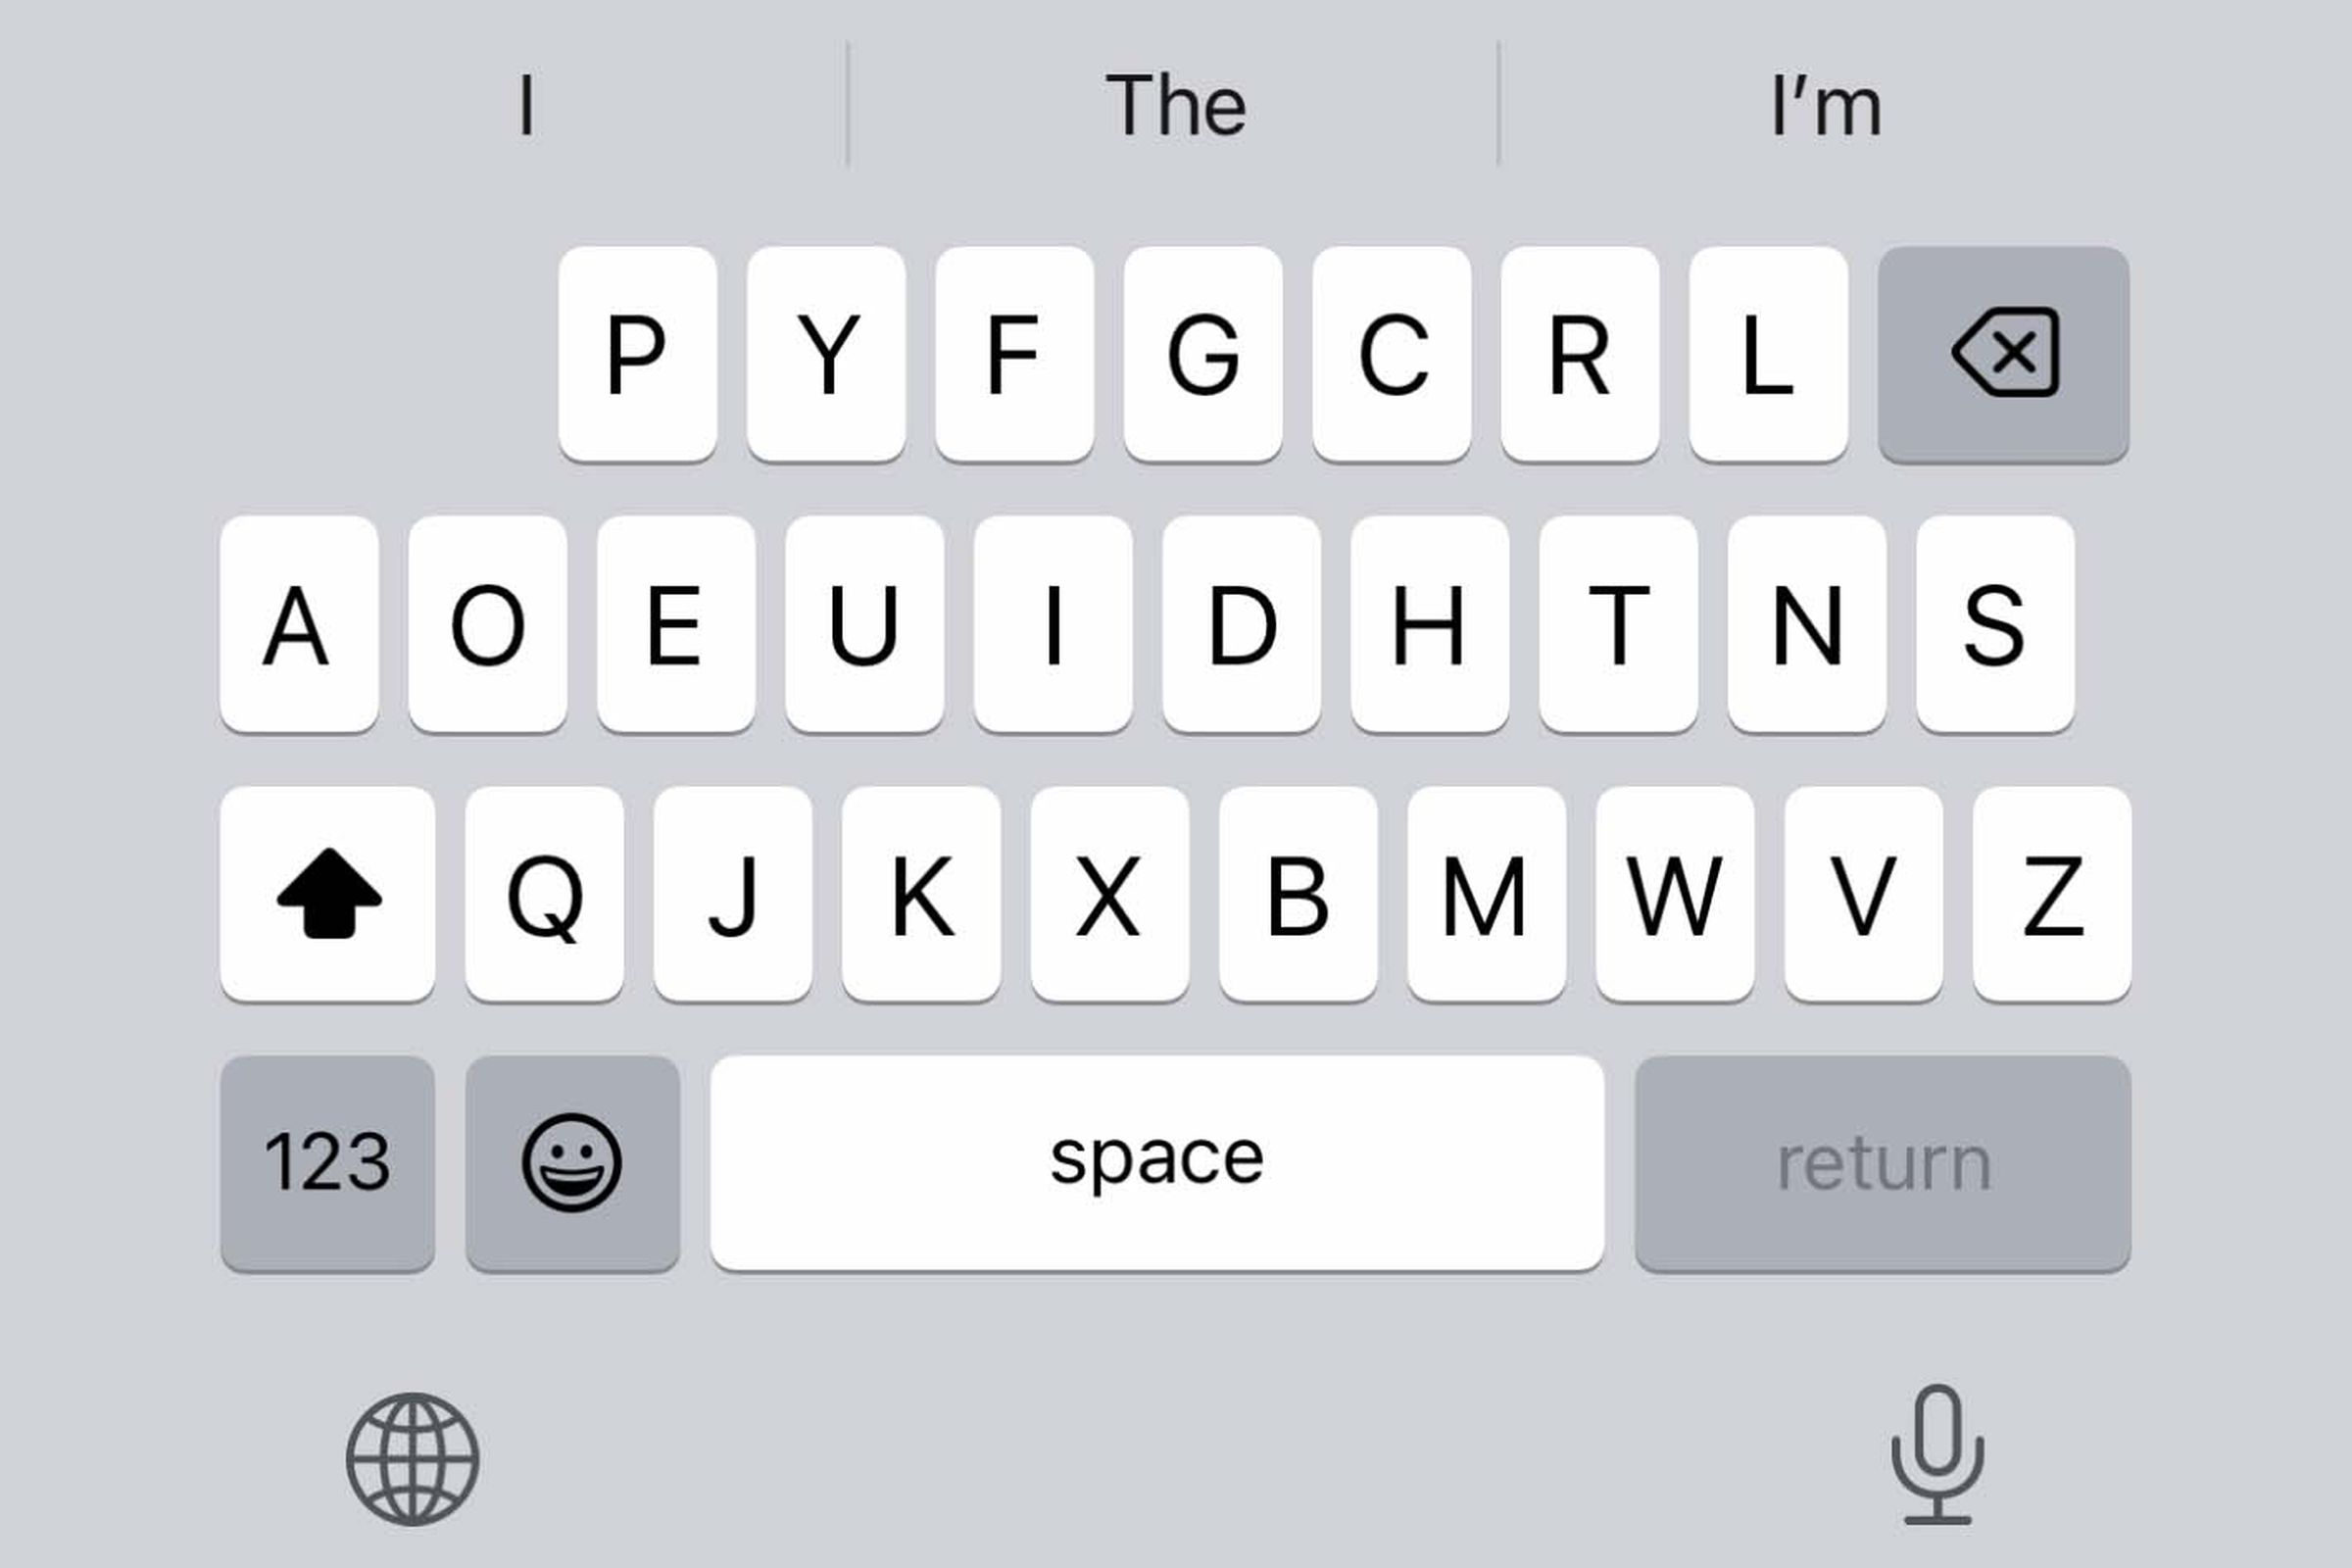 Apple’s native iOS keyboard in Dvorak layout.